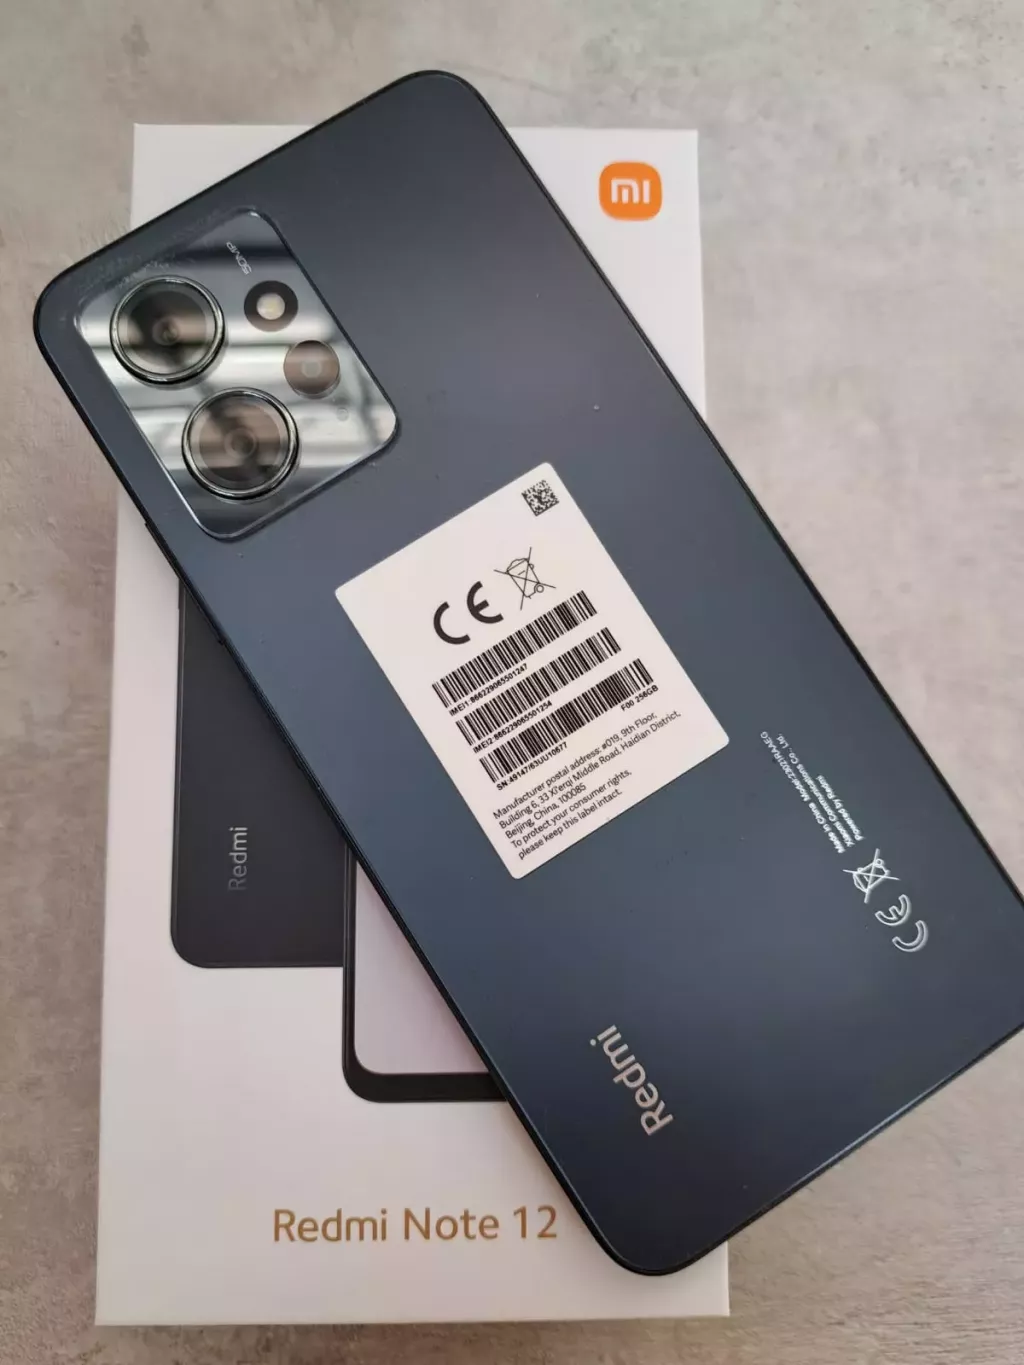 Купить б/у Xiaomi Redmi Note 12,  256 гб, Костанай 1015, лот 313732-0